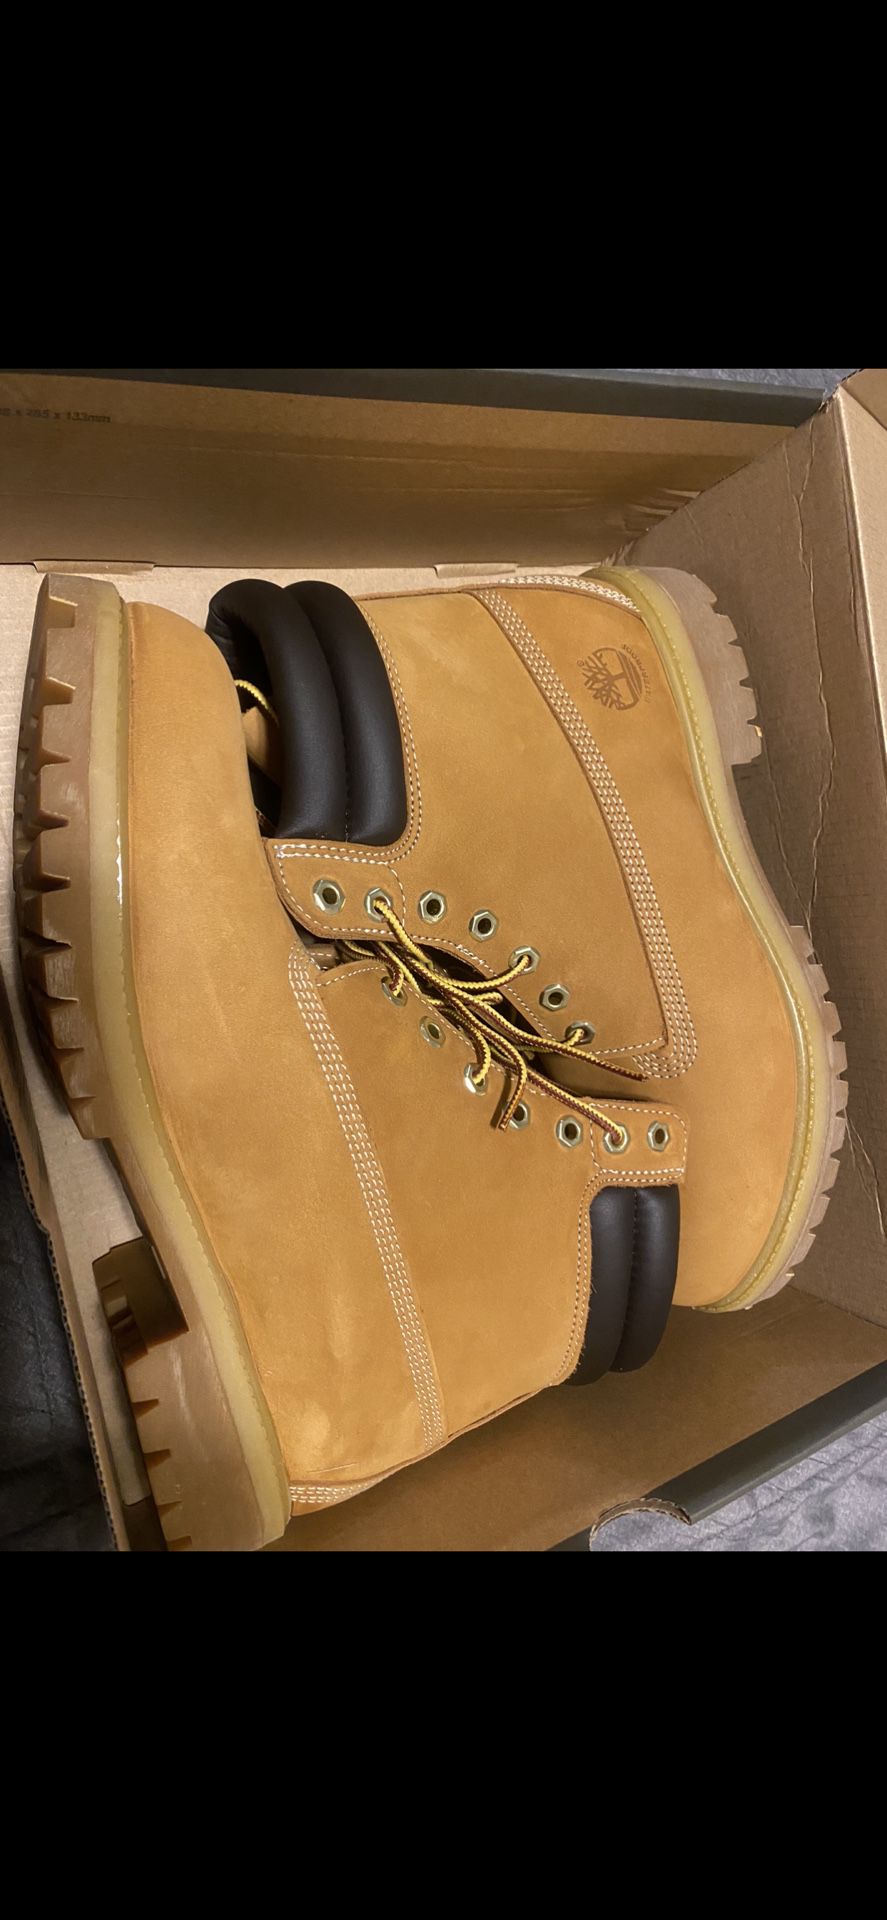 Timberland Size 10.5 Men’s 6-inch Premium Wheat Nubuck Waterproof boots